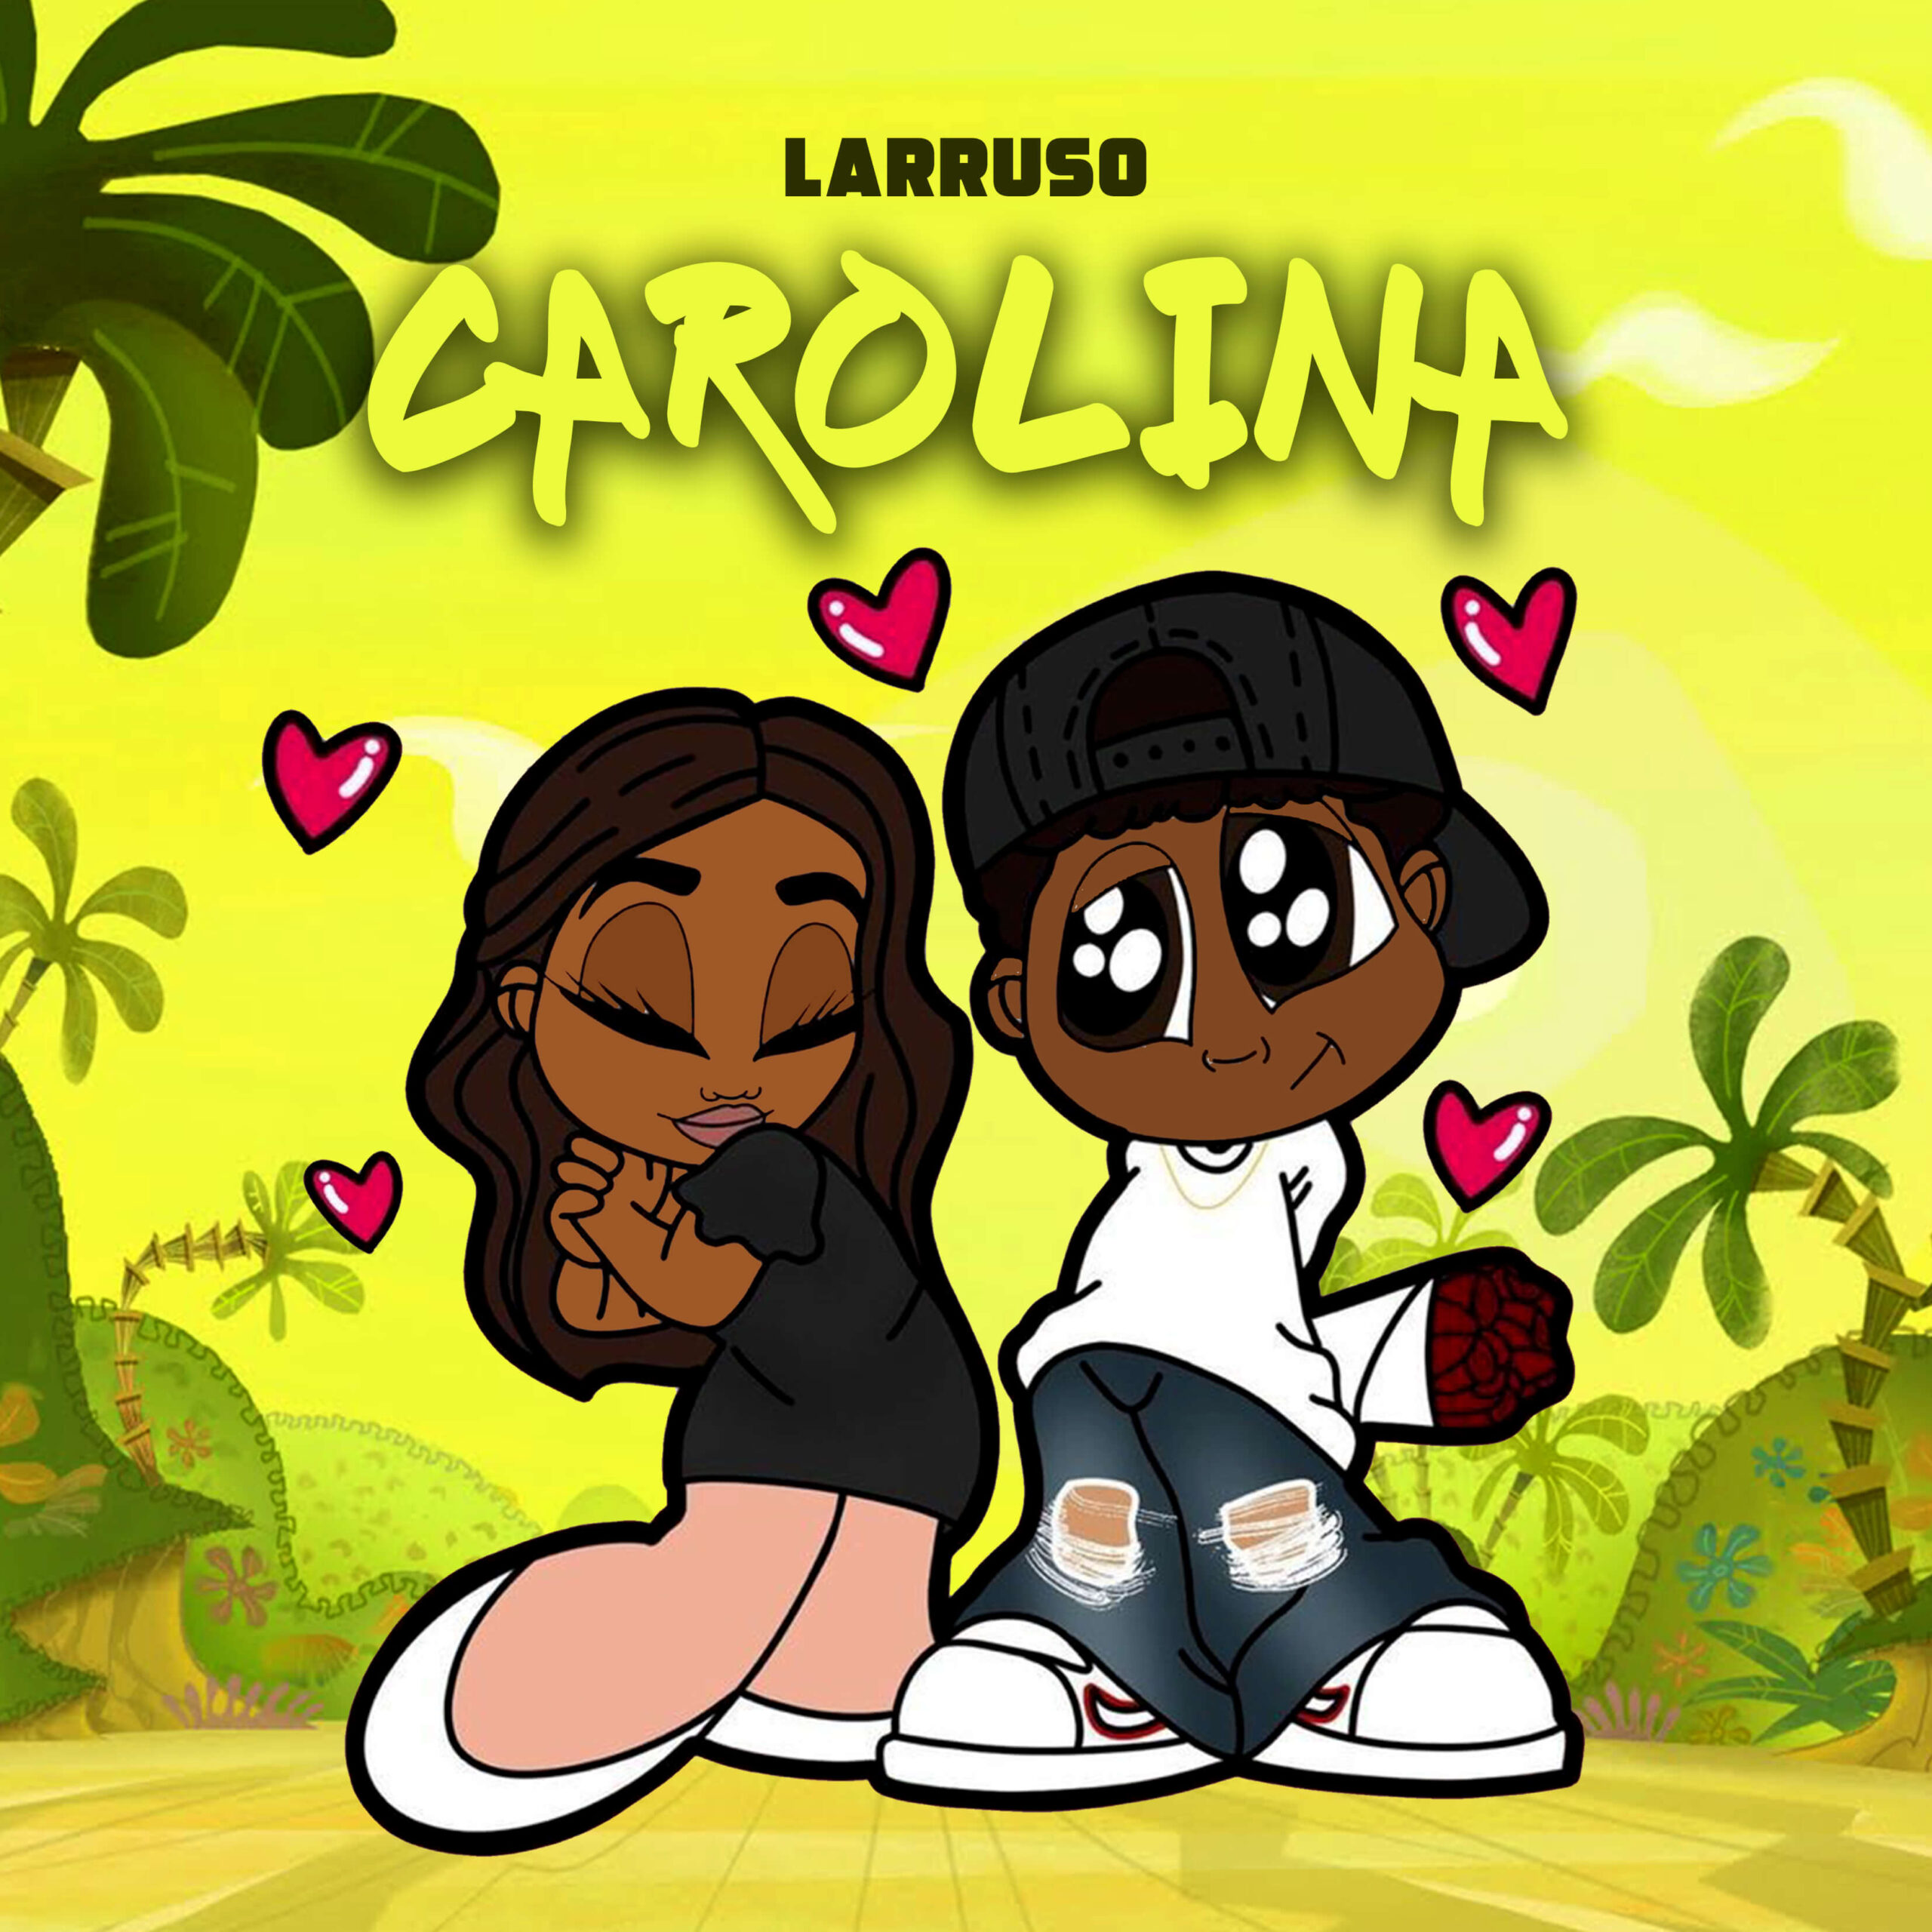 Larruso tells his love story with new single, “Carolina”